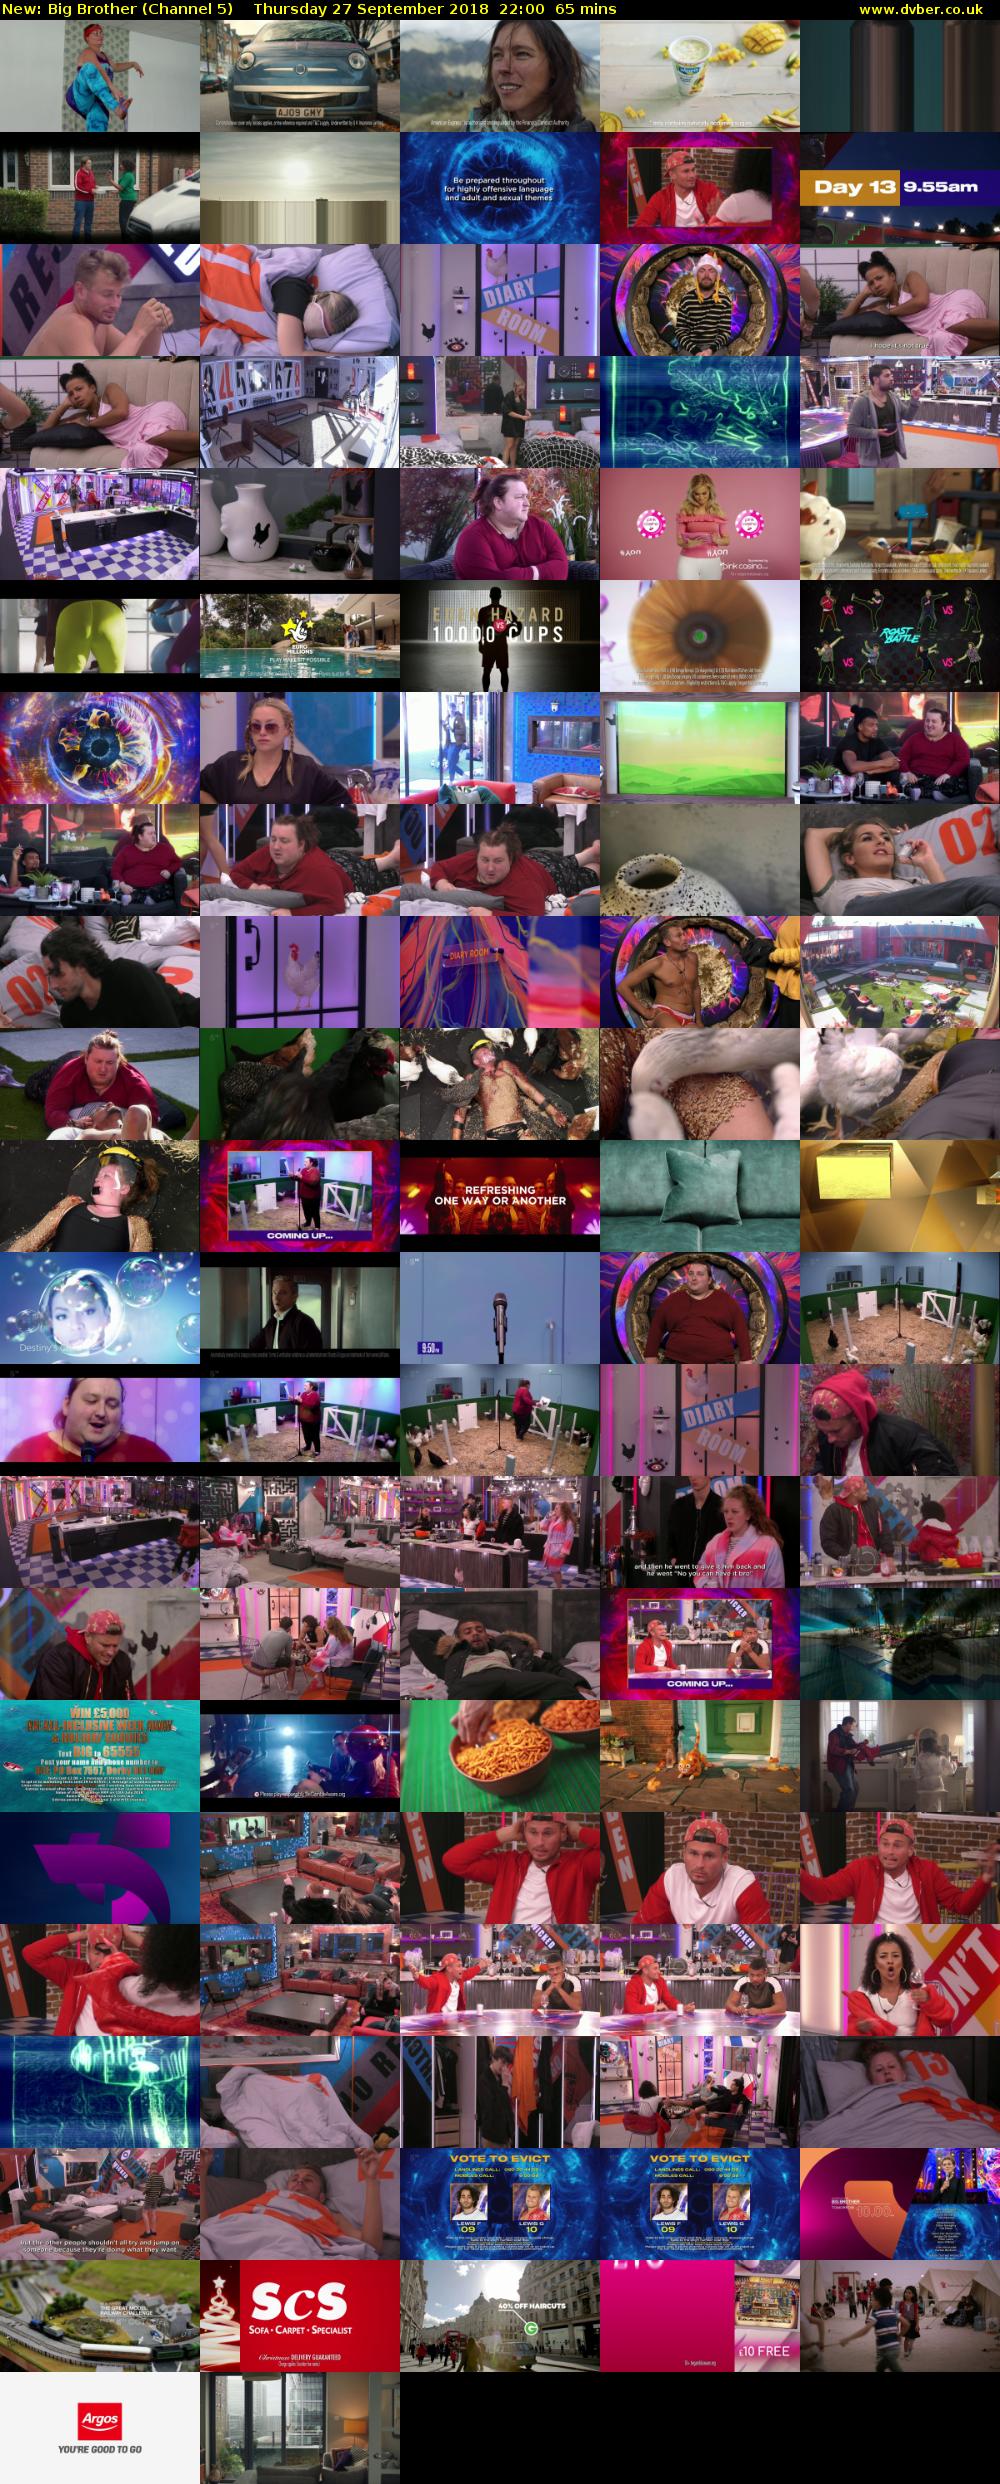 Big Brother (Channel 5) Thursday 27 September 2018 22:00 - 23:05